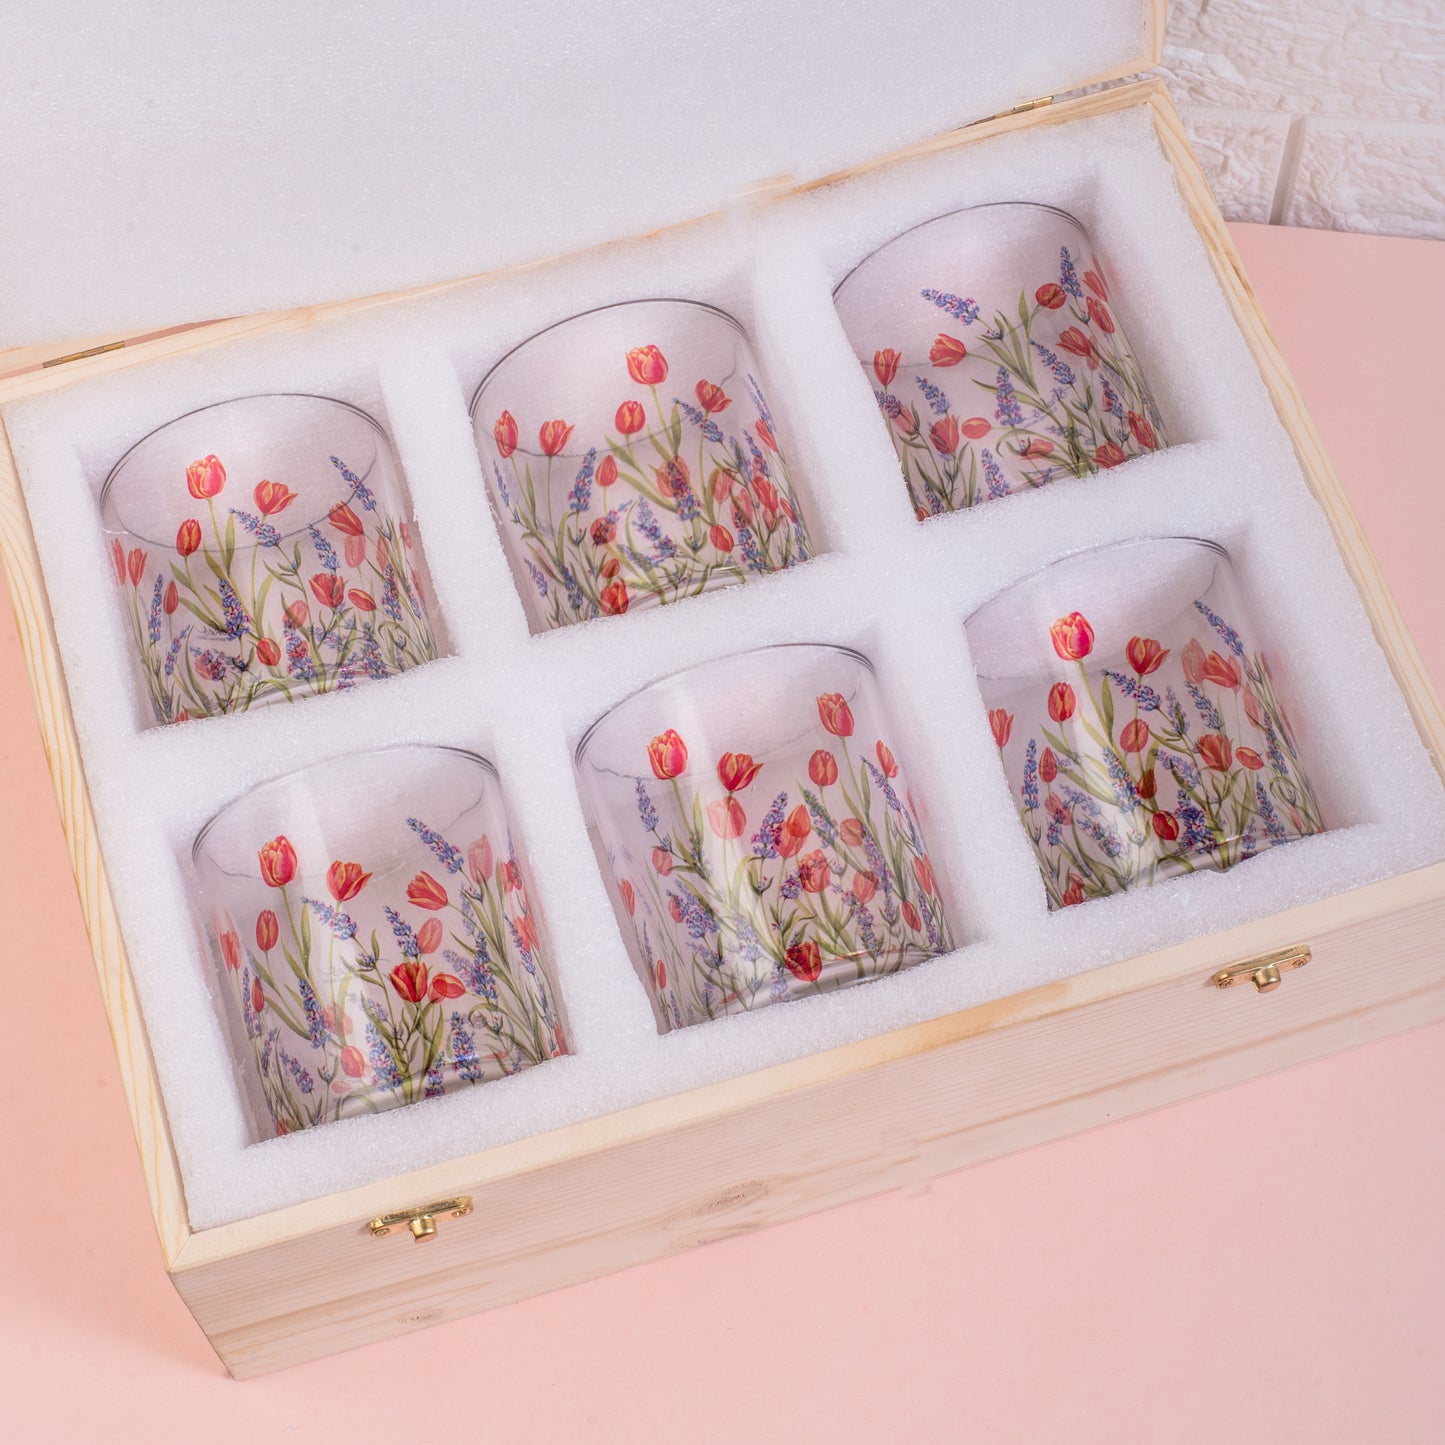 Tulips and Lavender Beverage Glasses - Gift Set